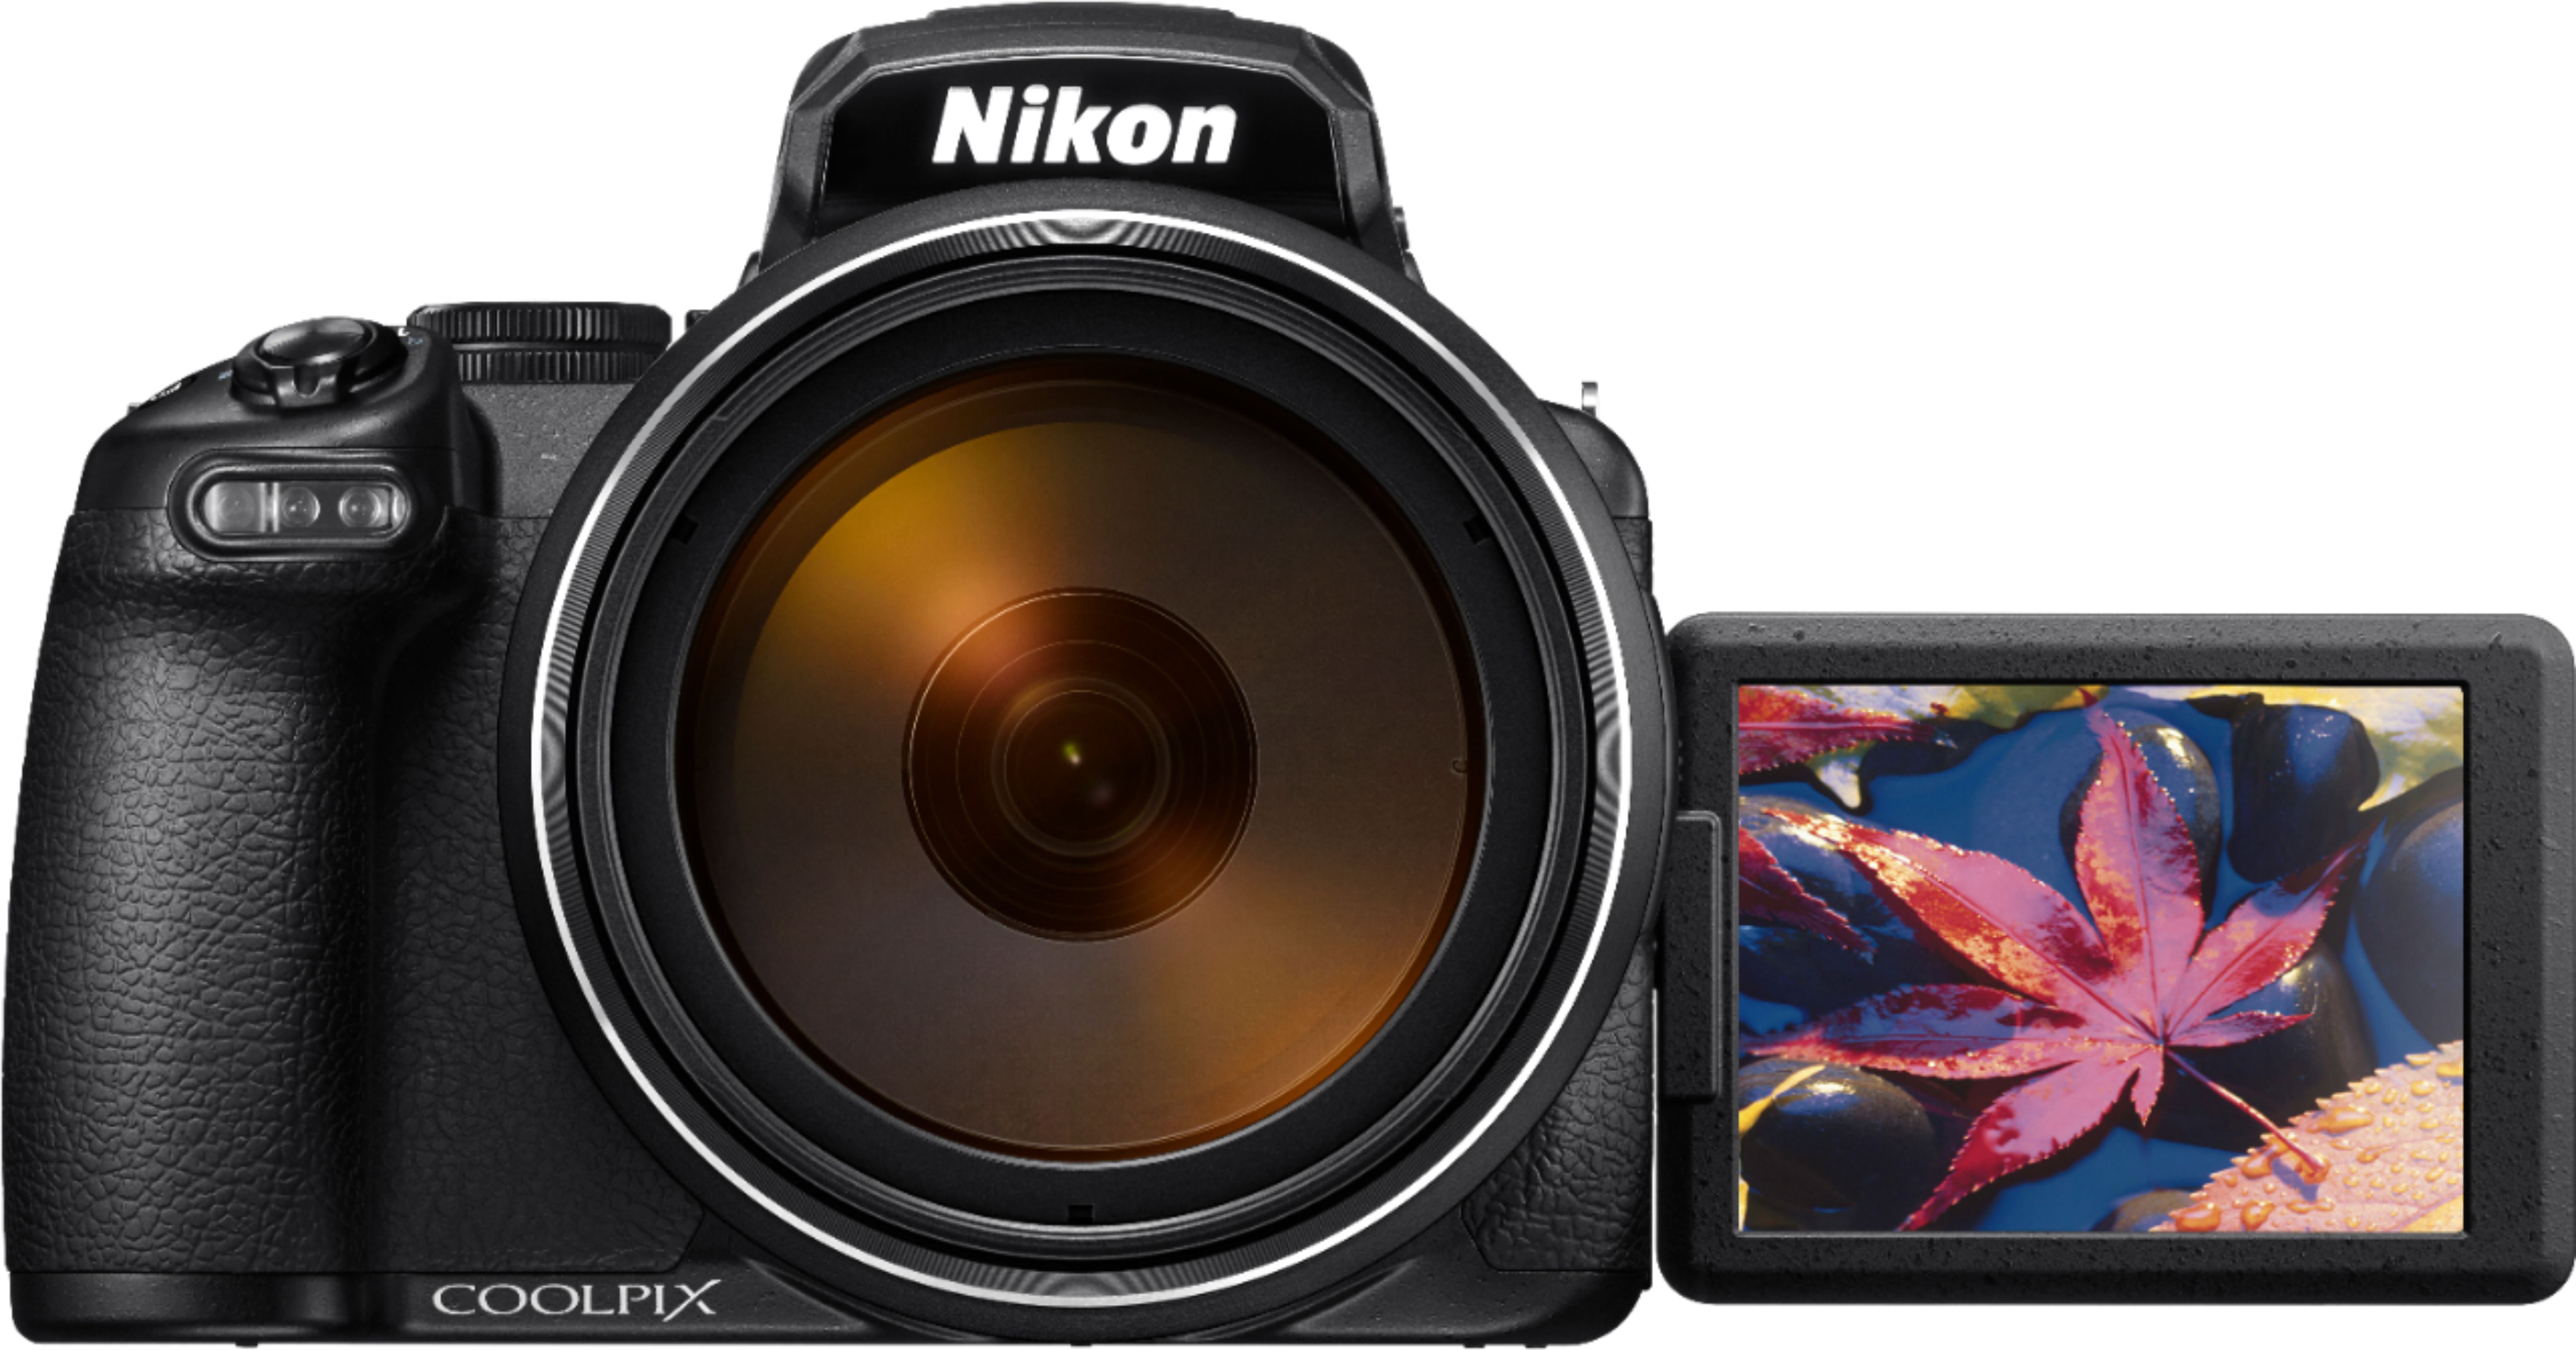 Nikon COOLPIX P1000 16.7 Digital Camera + 128GB Card, Tripod, Flash, and  More 18pc Bundle